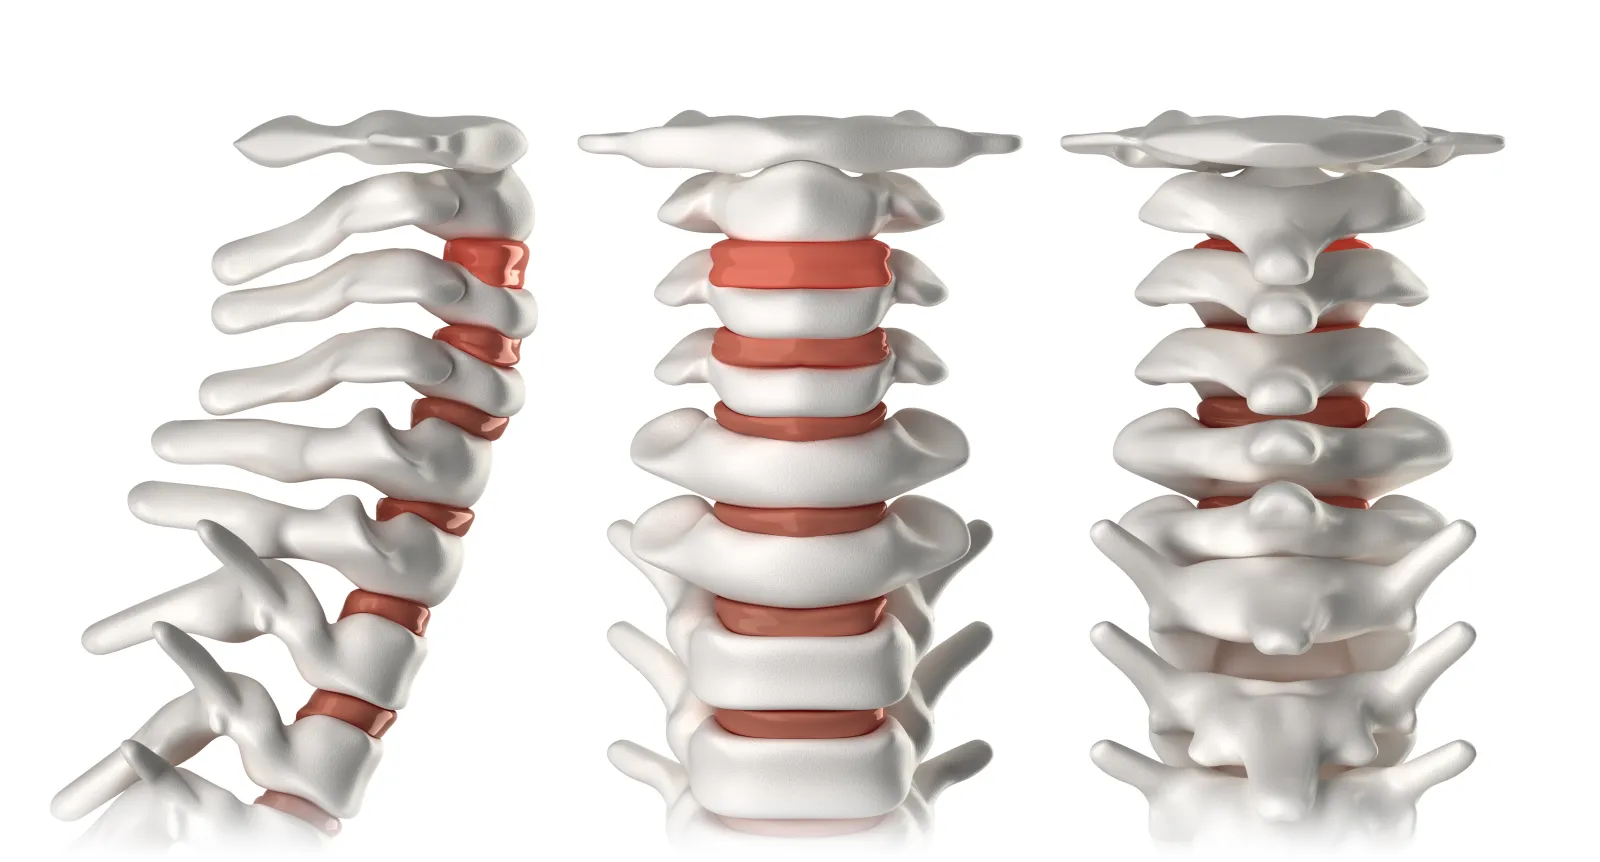 Compression of the spine, vertebral discs, and vertebrae